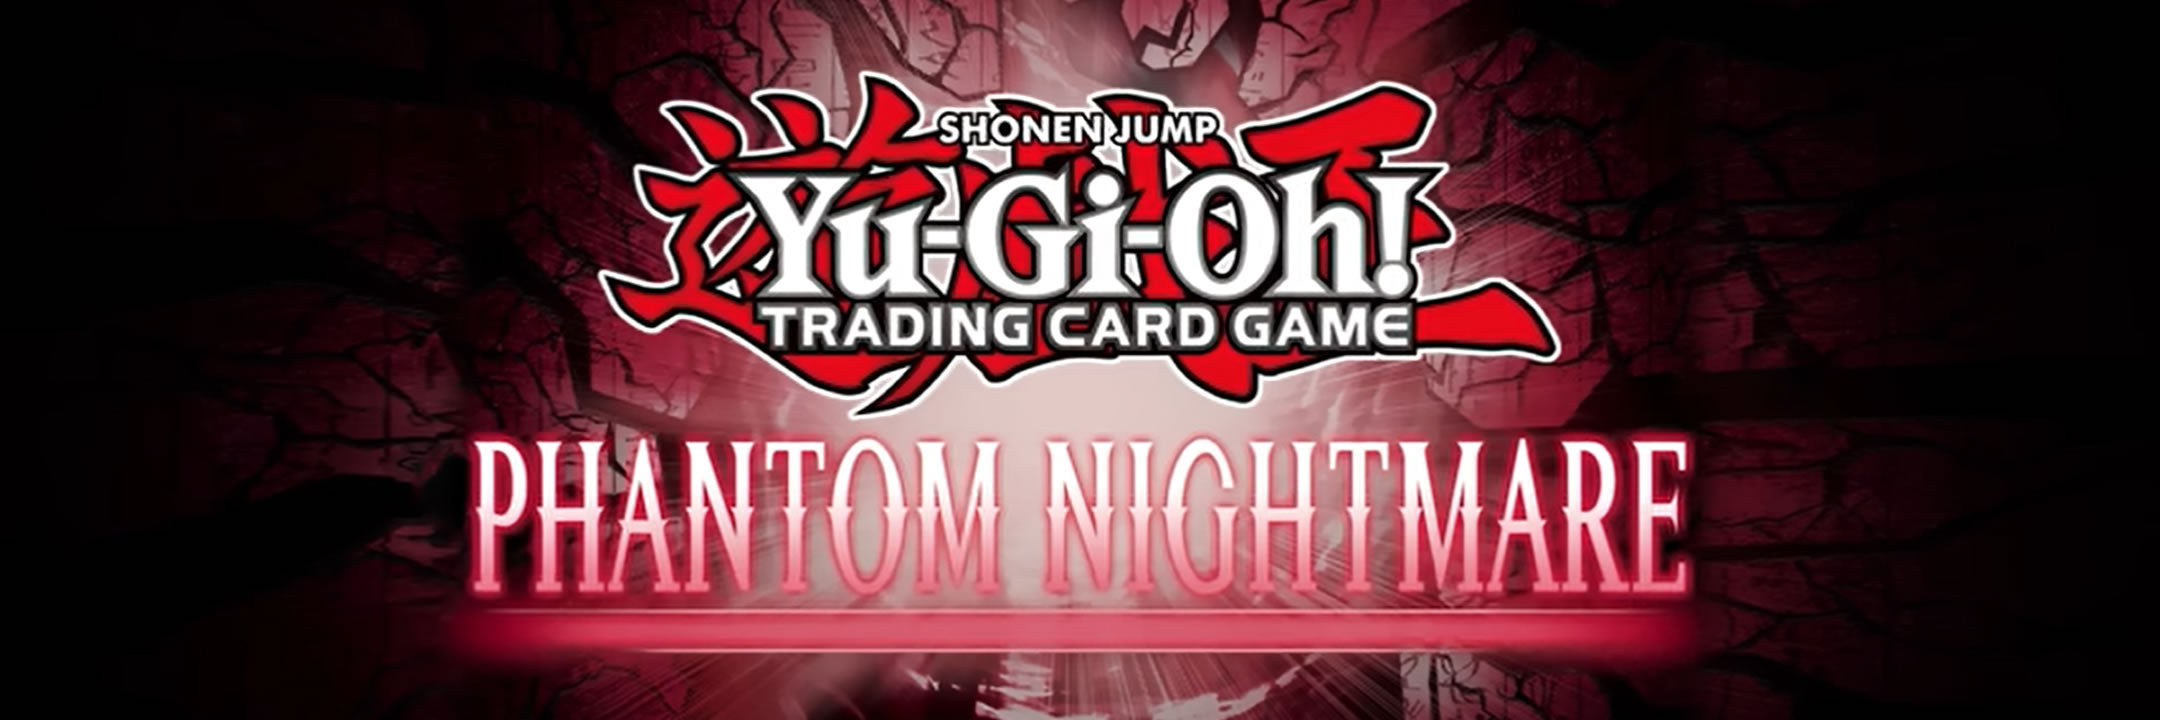 Yu-Gi-Oh! Trading Card Game - Phantom Nightmare